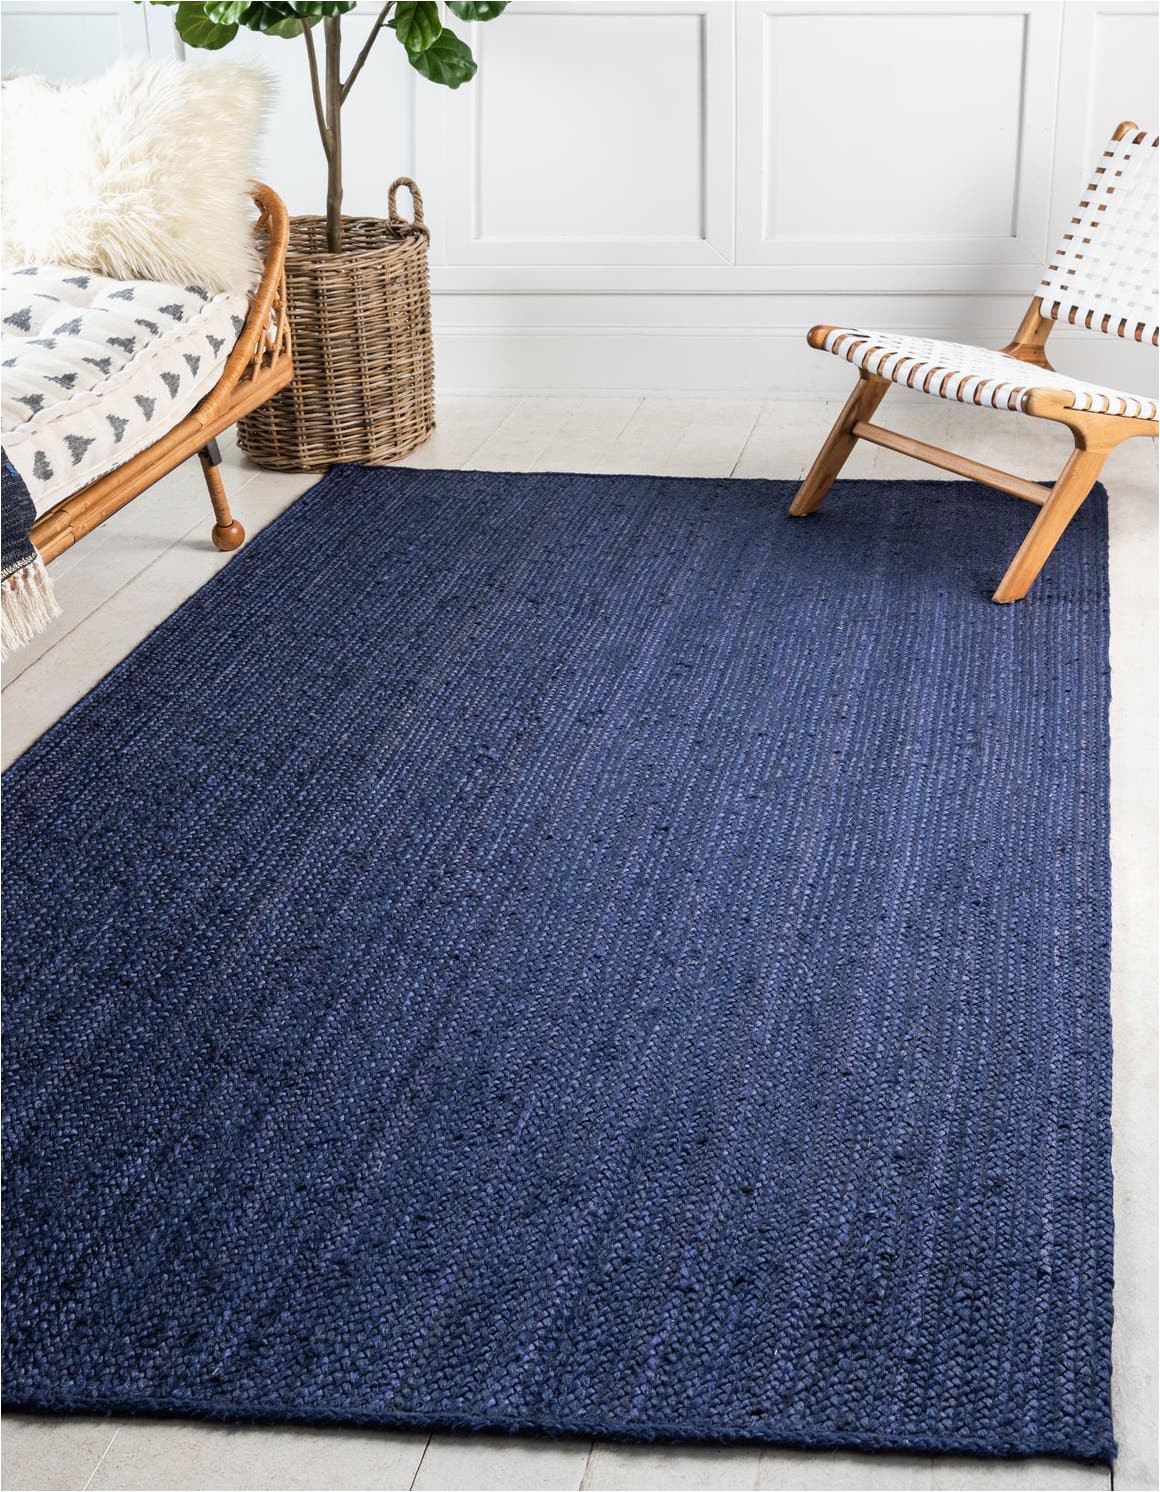 navy blue 5x8 braided jute area rug